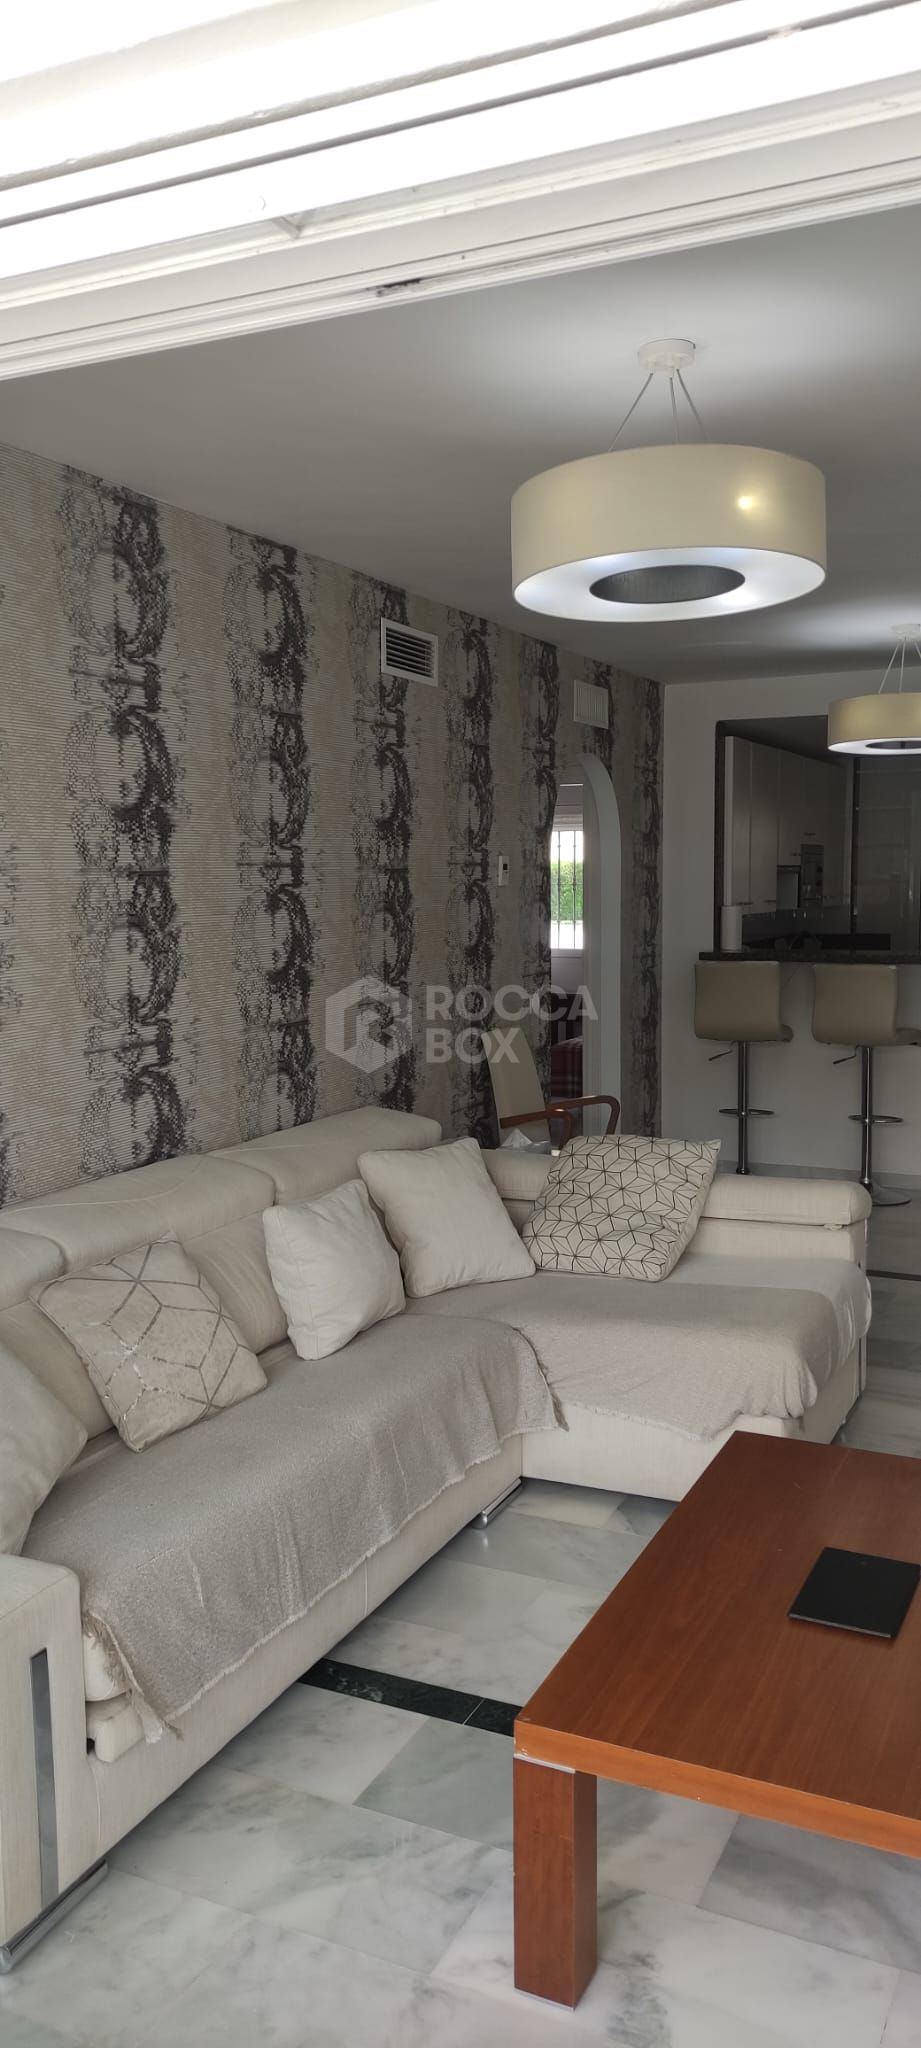 4 bedrooms groudfloor apartment in Residencia La Ola